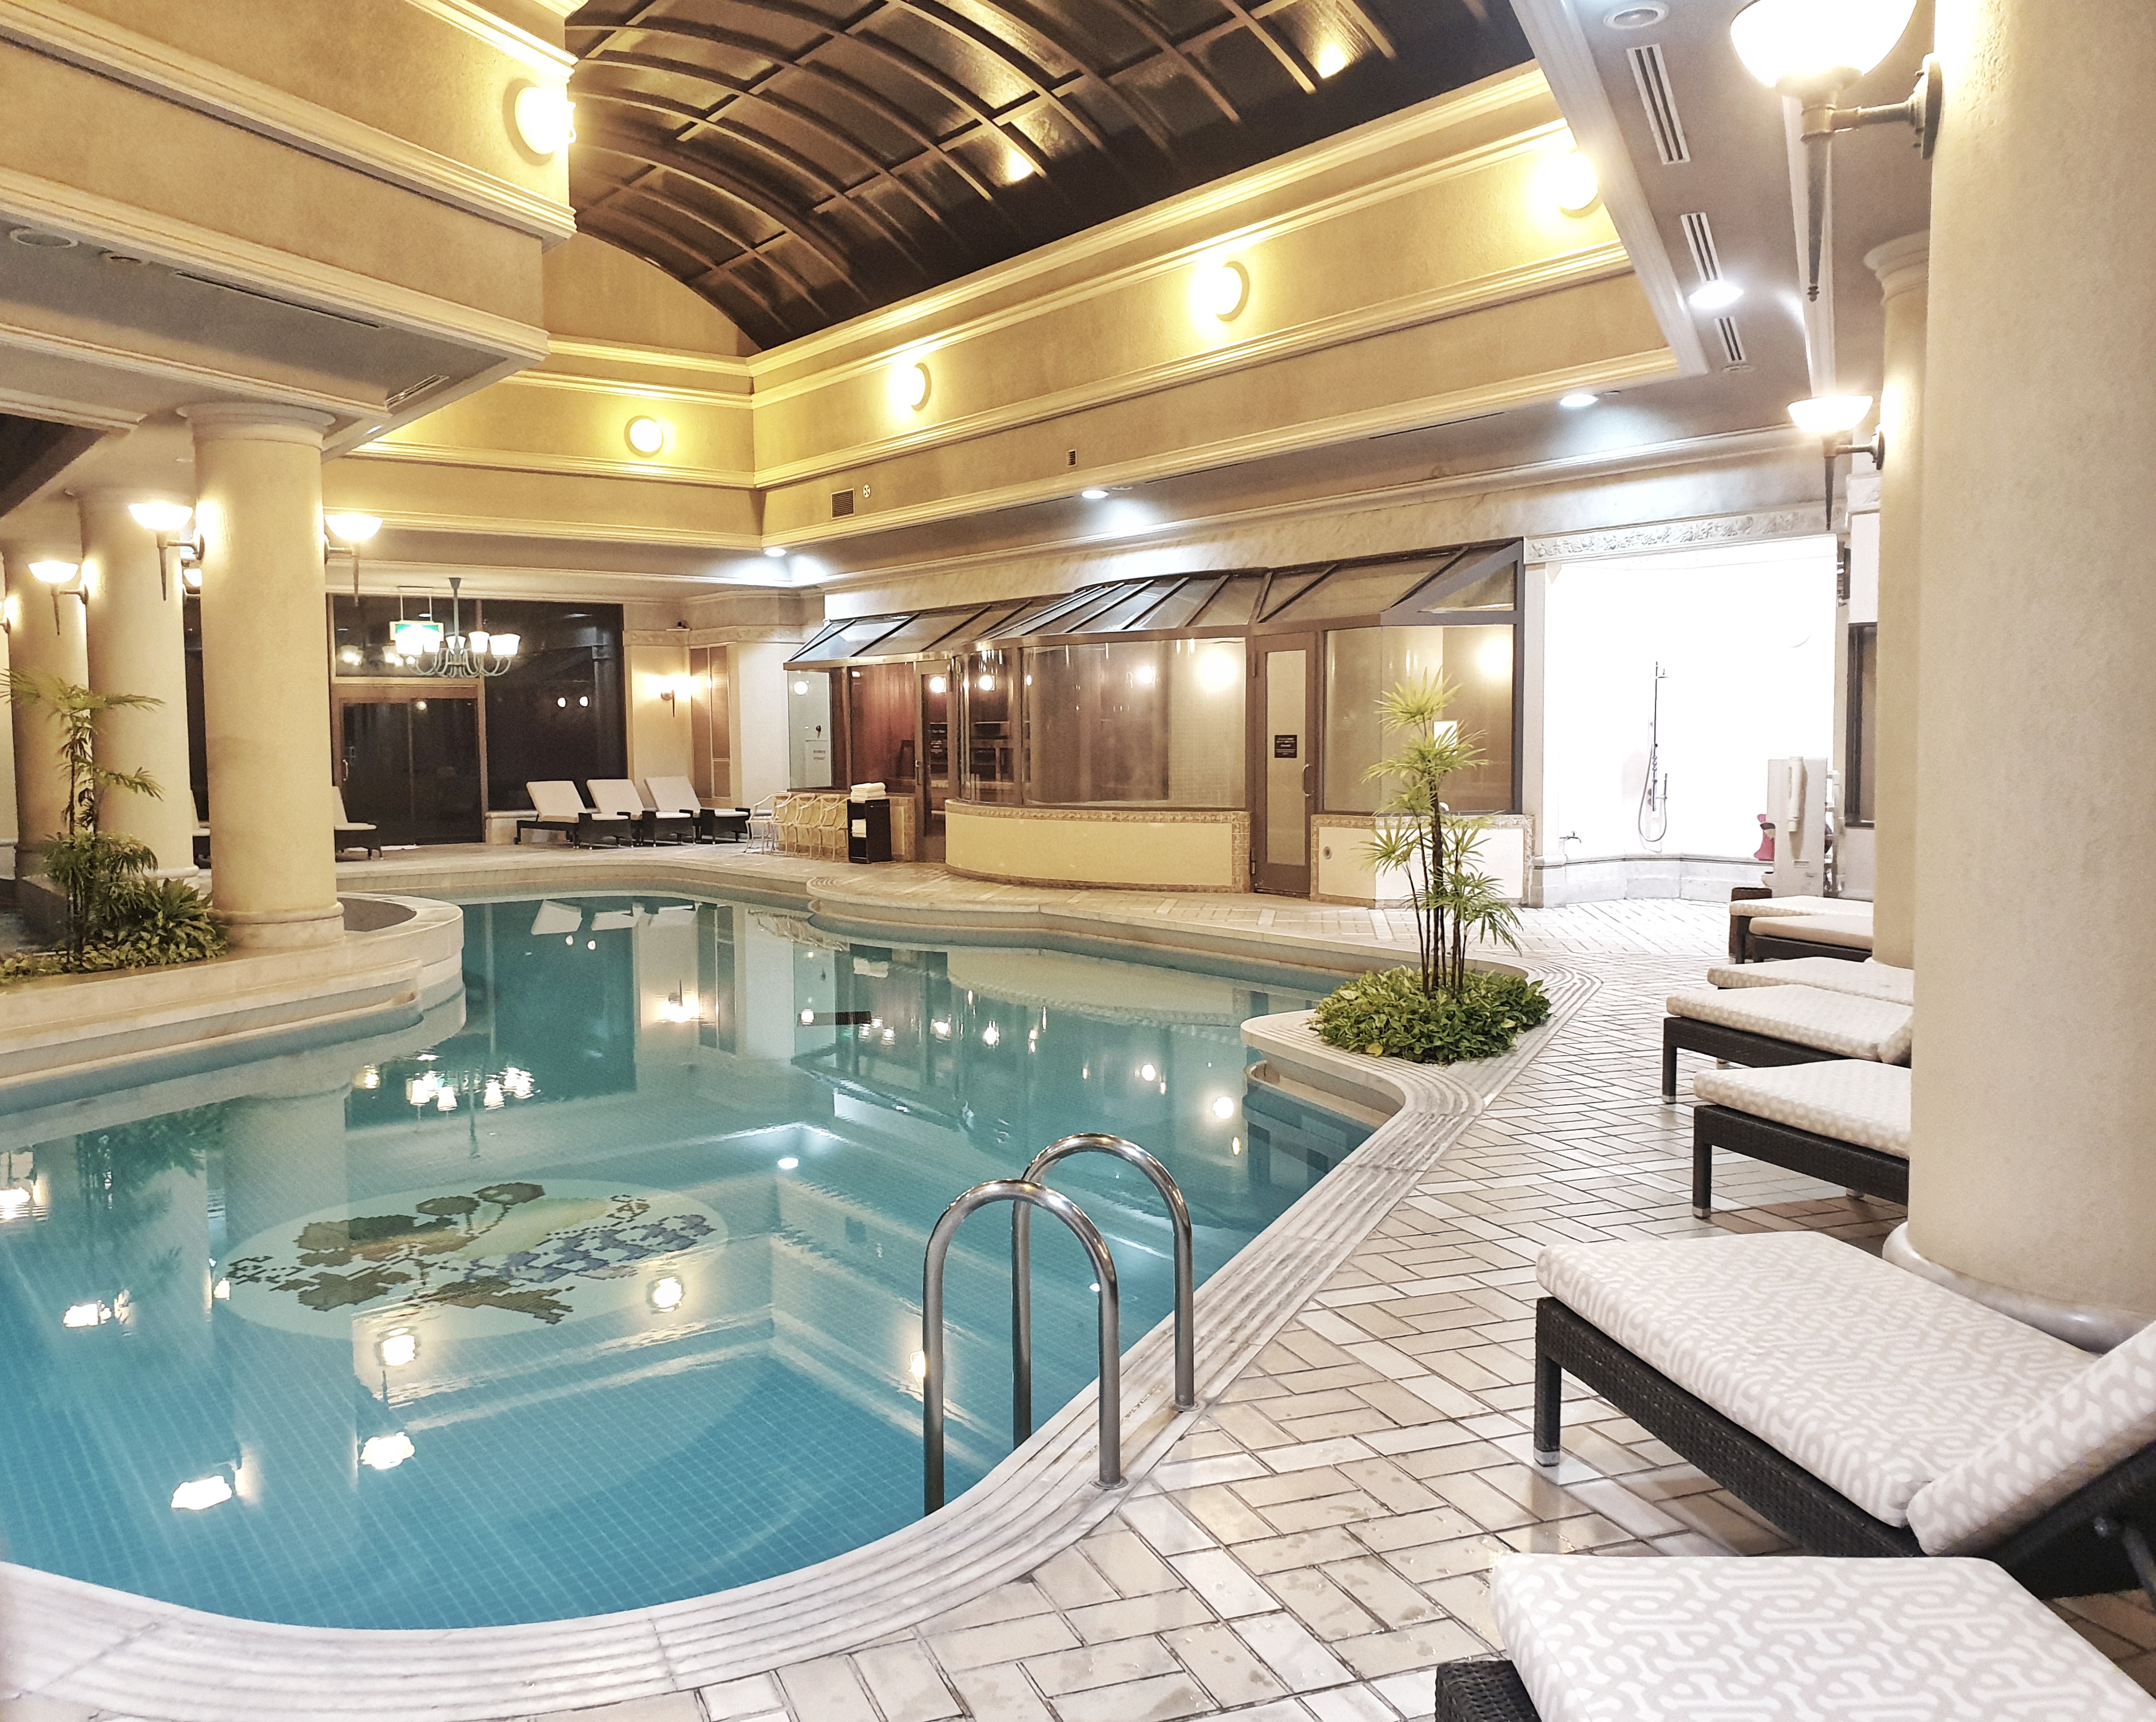 Hotel Chinzanso pool, Tokyo, Japan